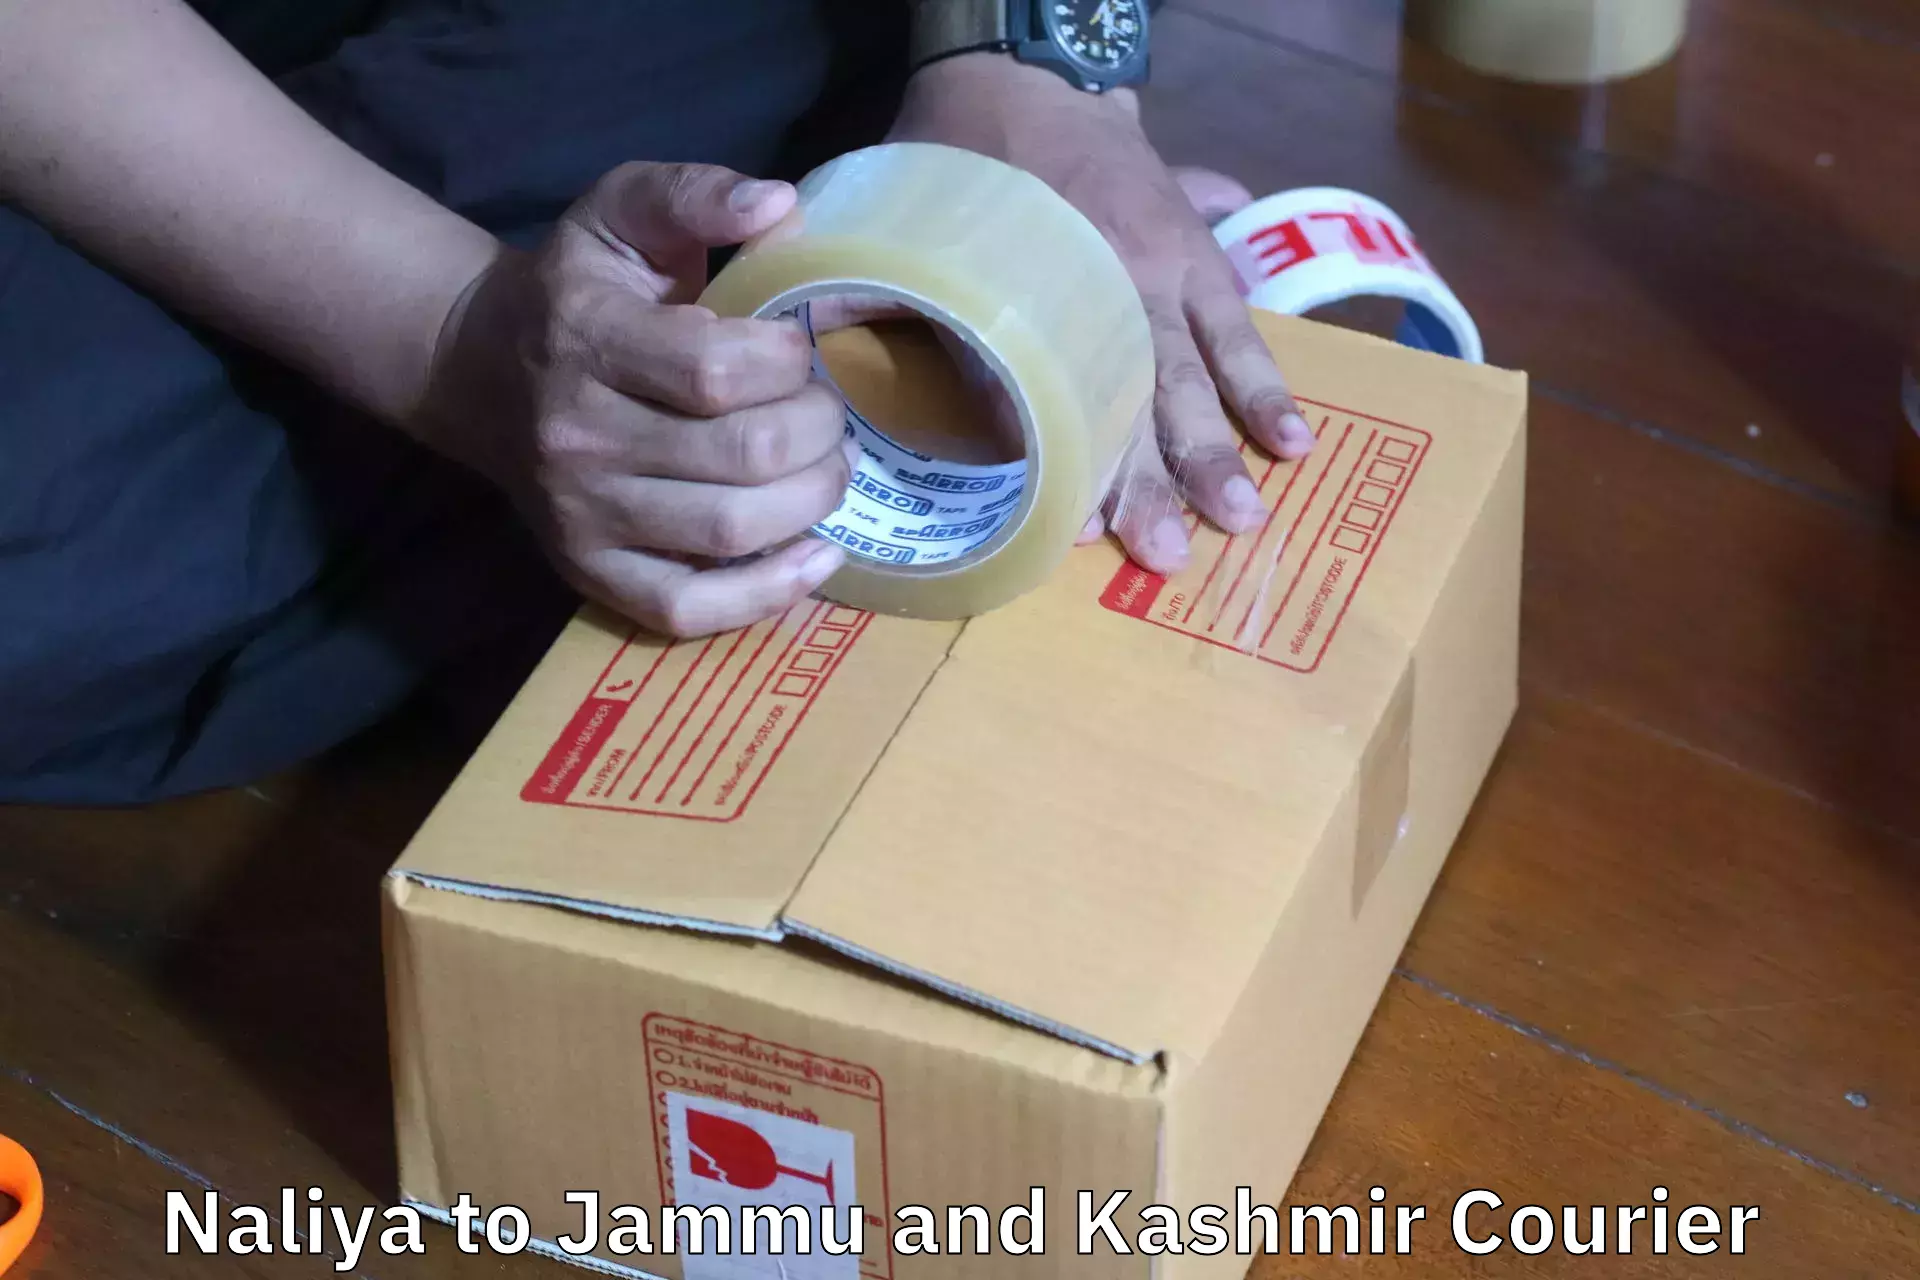 Professional movers and packers Naliya to Jammu and Kashmir